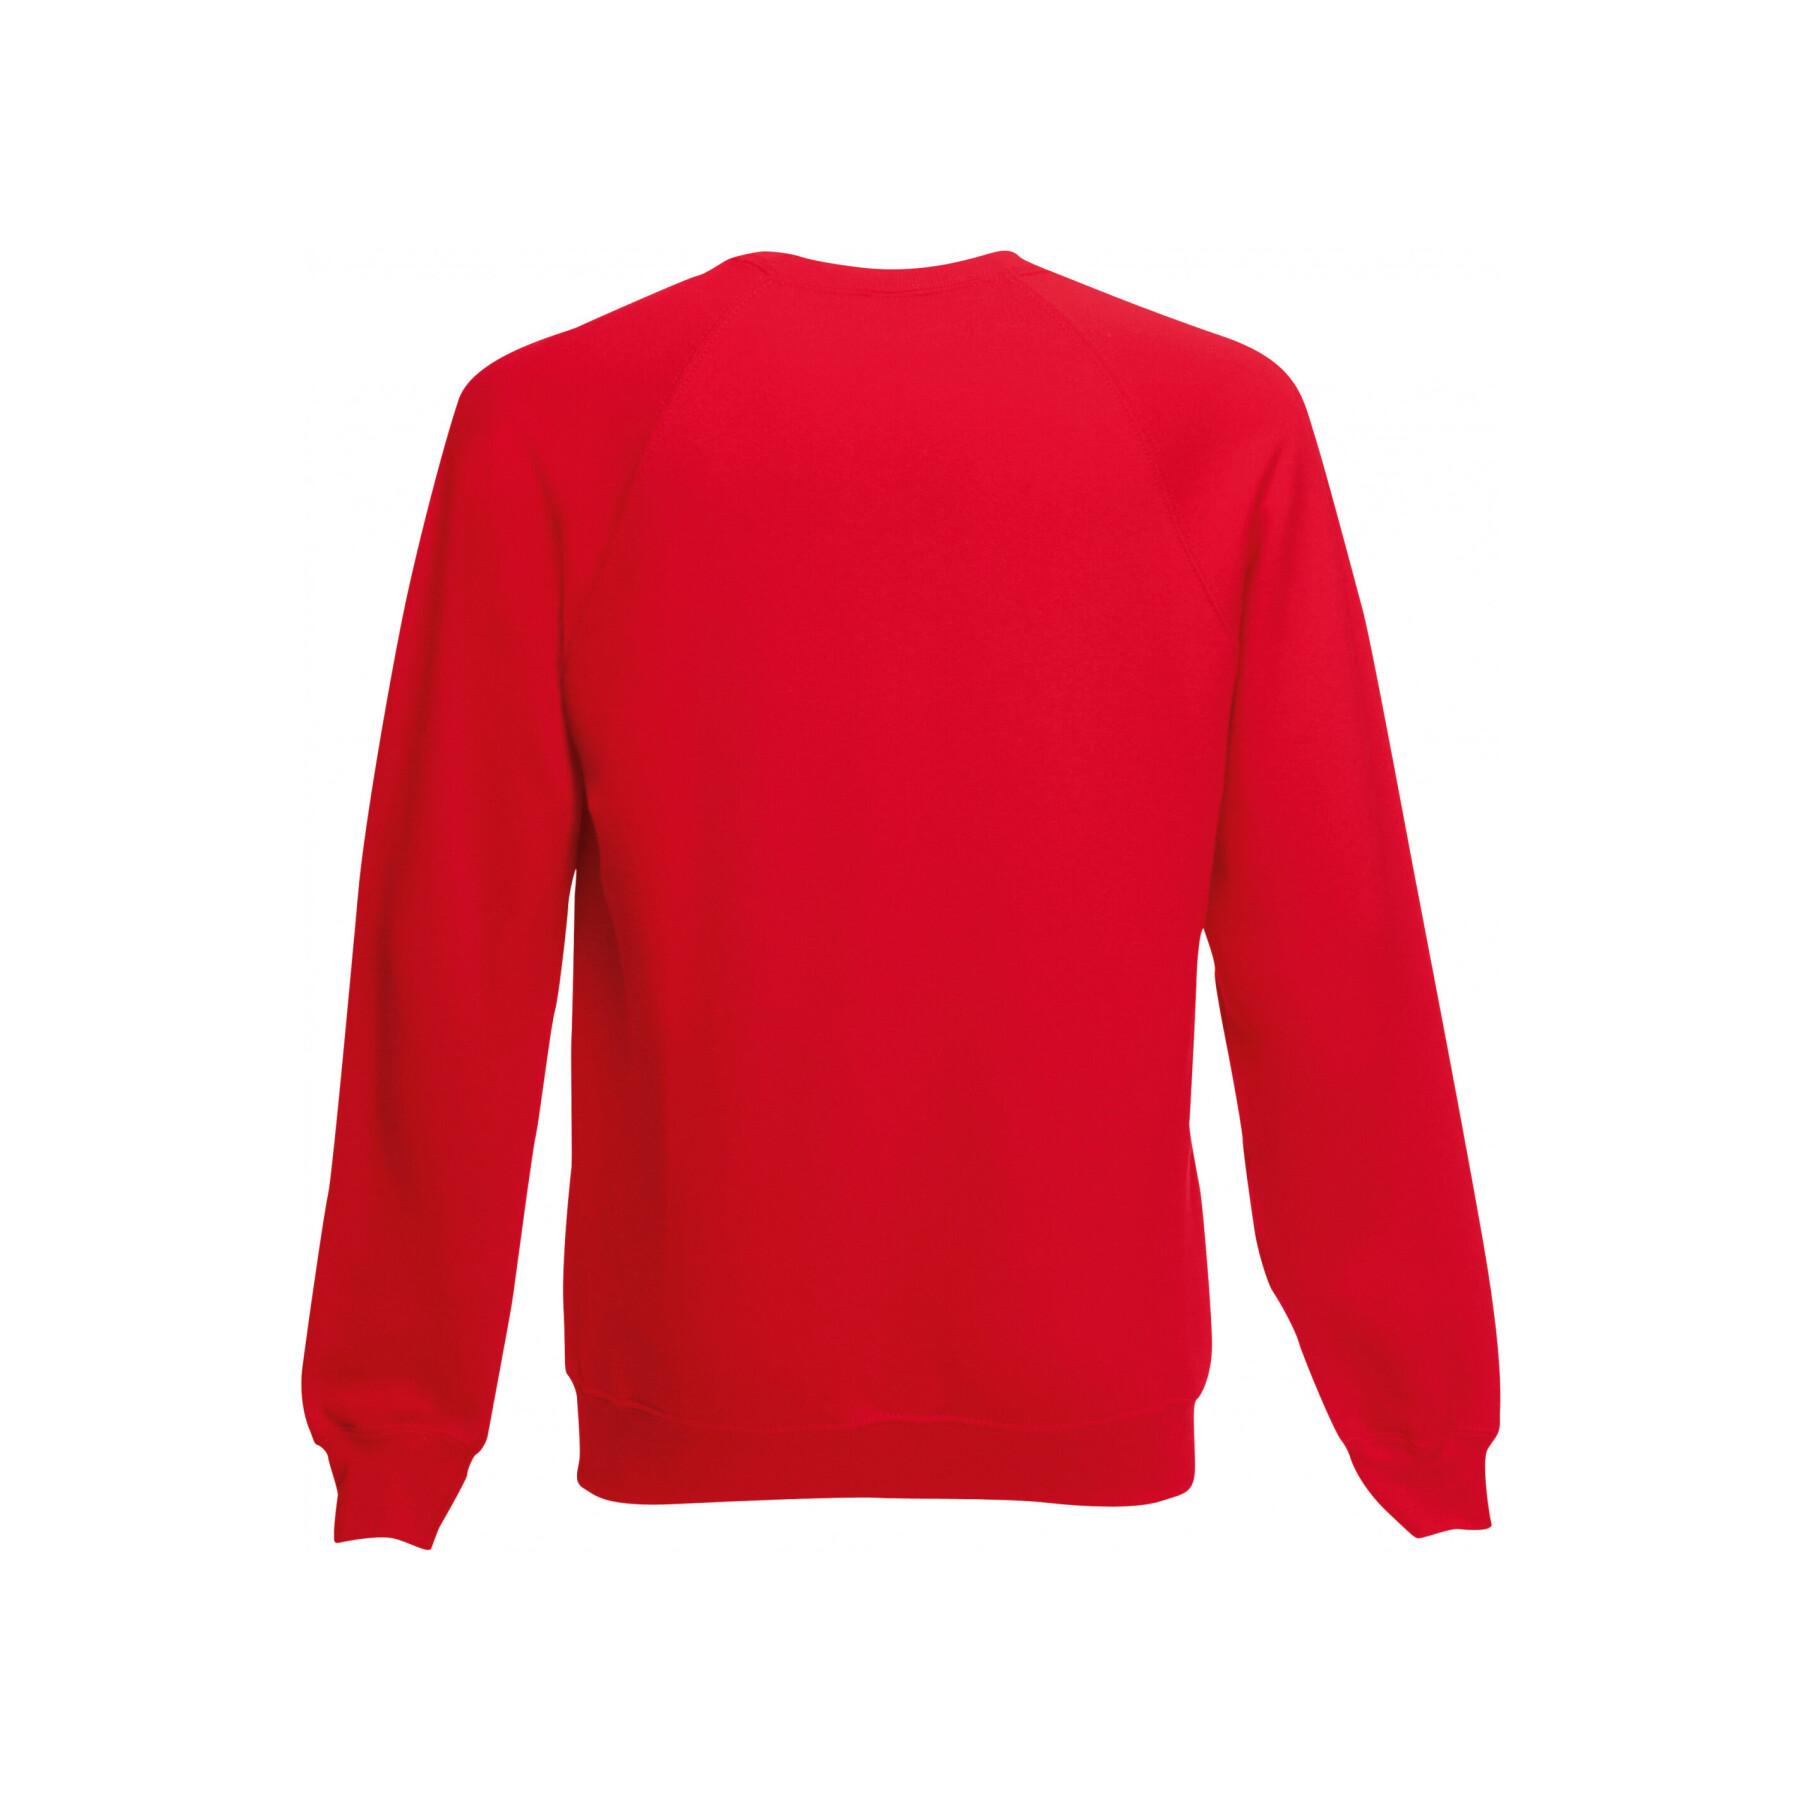 Sweatshirt raglan sleeves child Fruit of the Loom 62-039-0